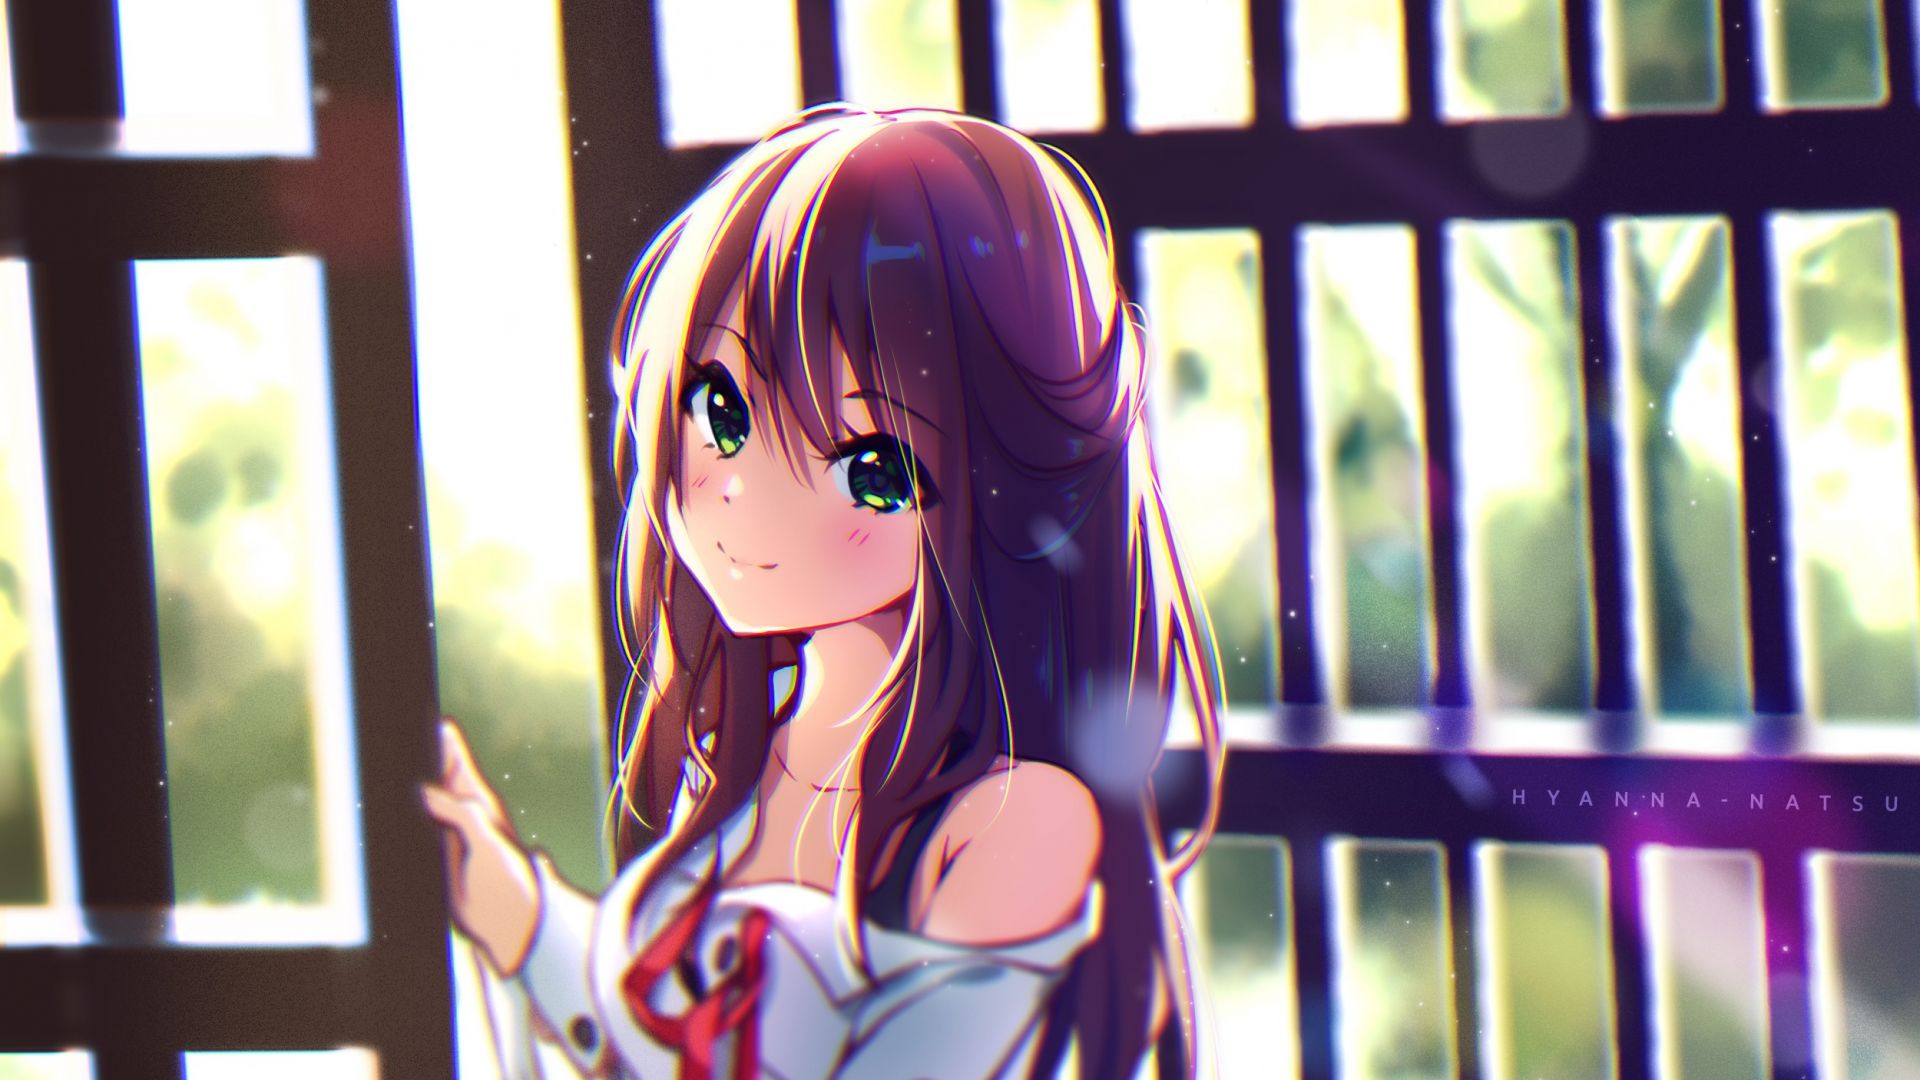 Desktop Wallpaper Cute Long Hair Anime Girl, Hd Image, Picture, Background,  Sg8dfr